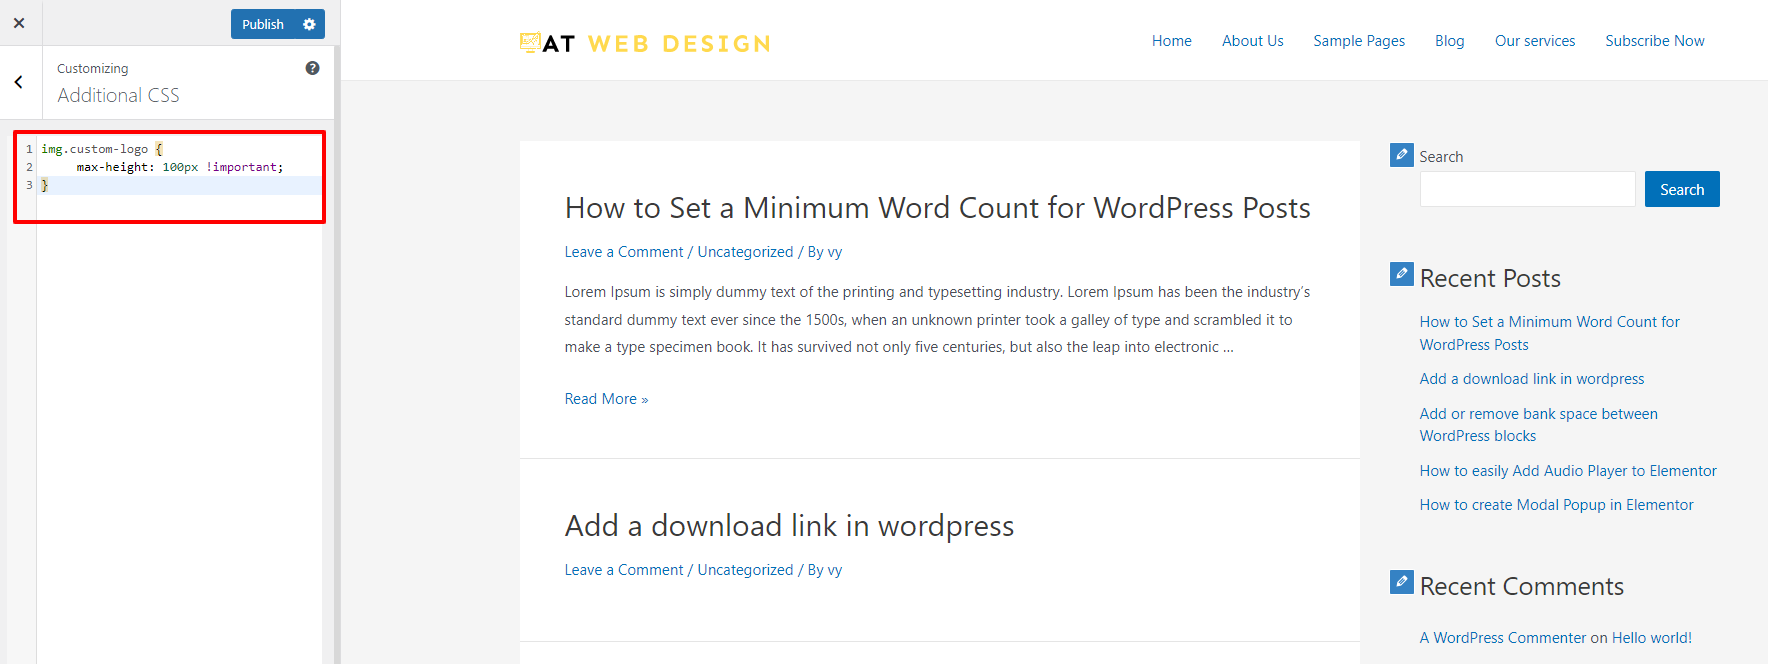 Change Your Logo Size In Wordpress 45